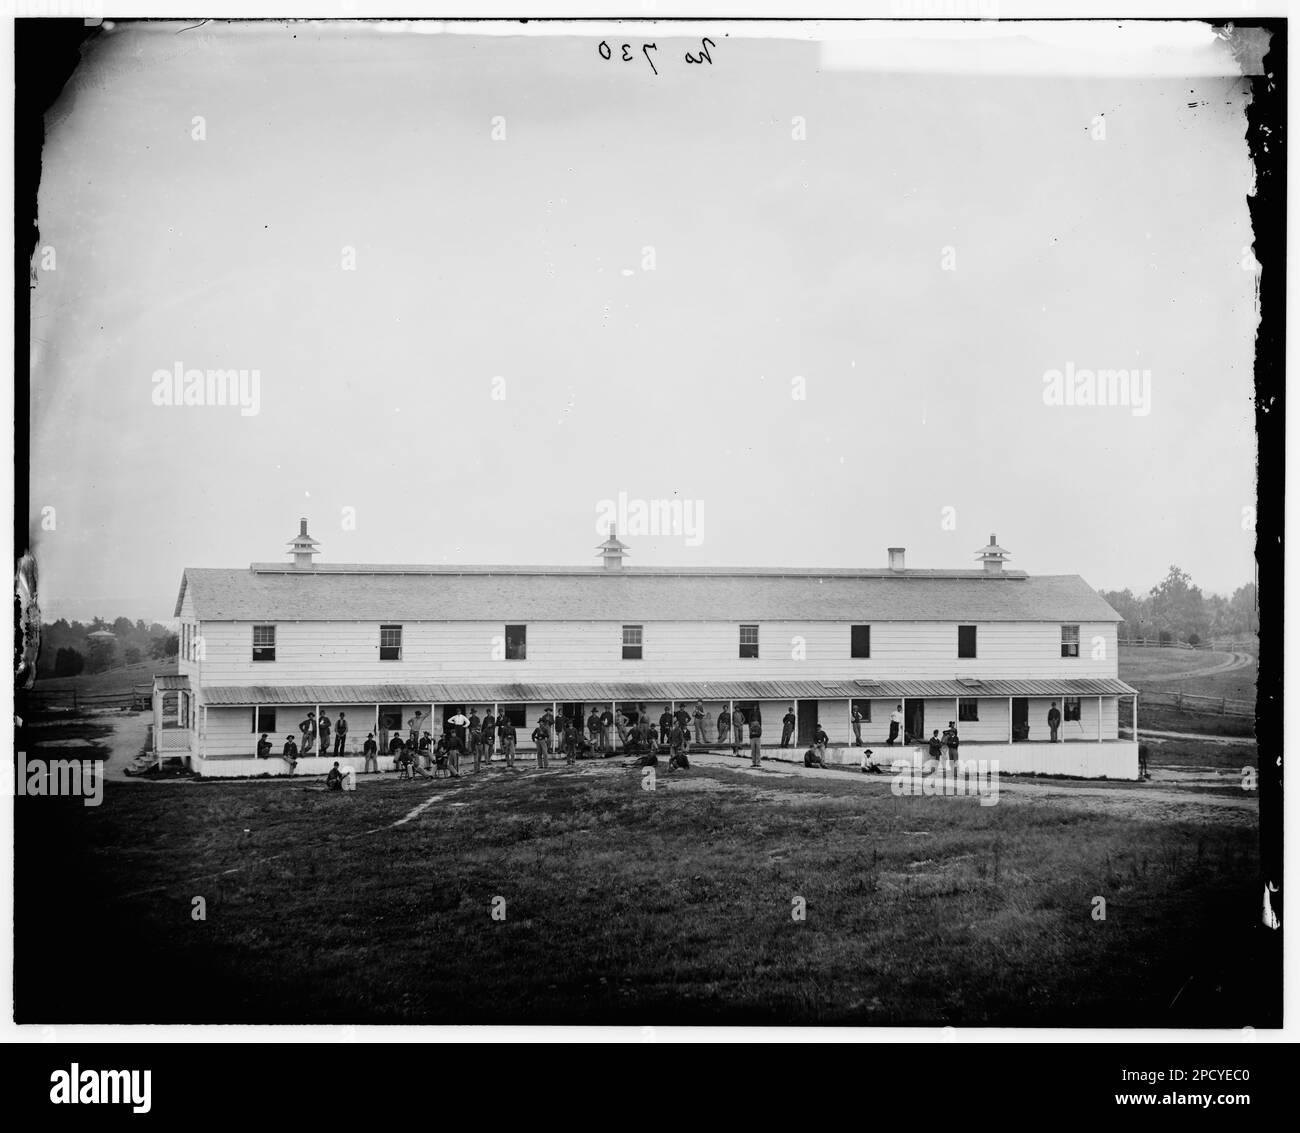 Washington, District of Columbia. Signal Corps camp near Georgetown. Civil war photographs, 1861-1865 . United States, History, Civil War, 1861-1865. Stock Photo